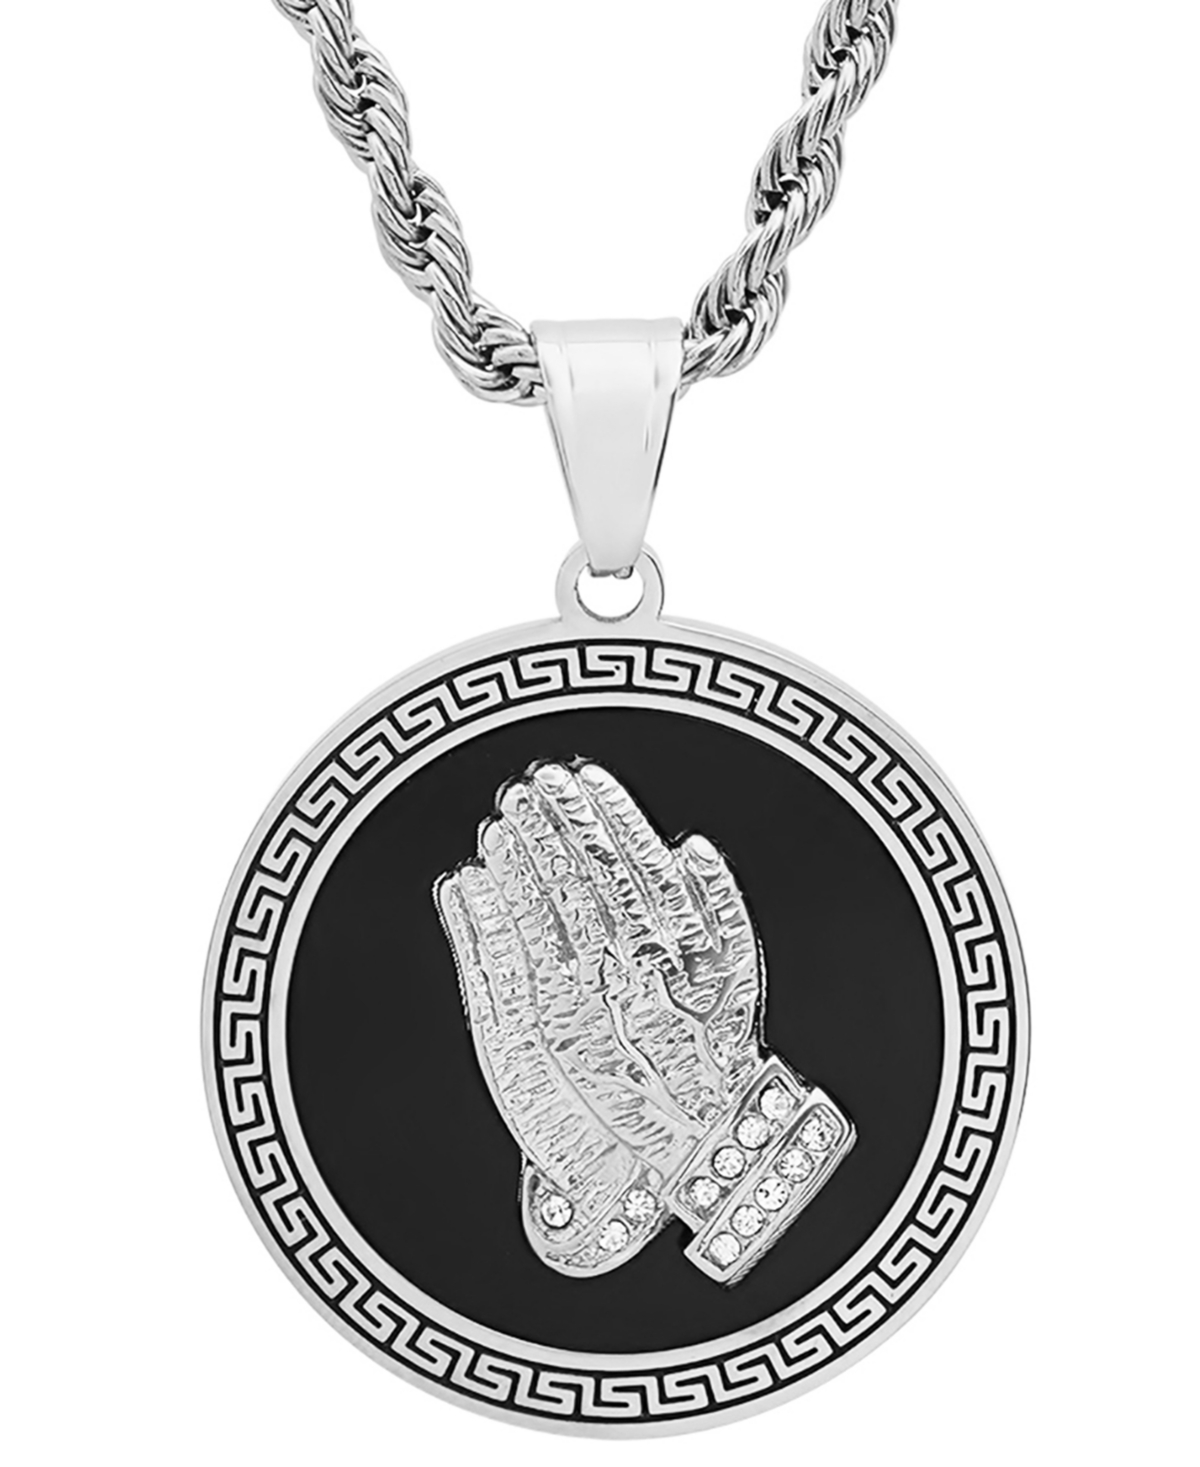 Men's Stainless Steel Prayer Hand & Greek Key 24" Pendant Necklace - Black, Silver